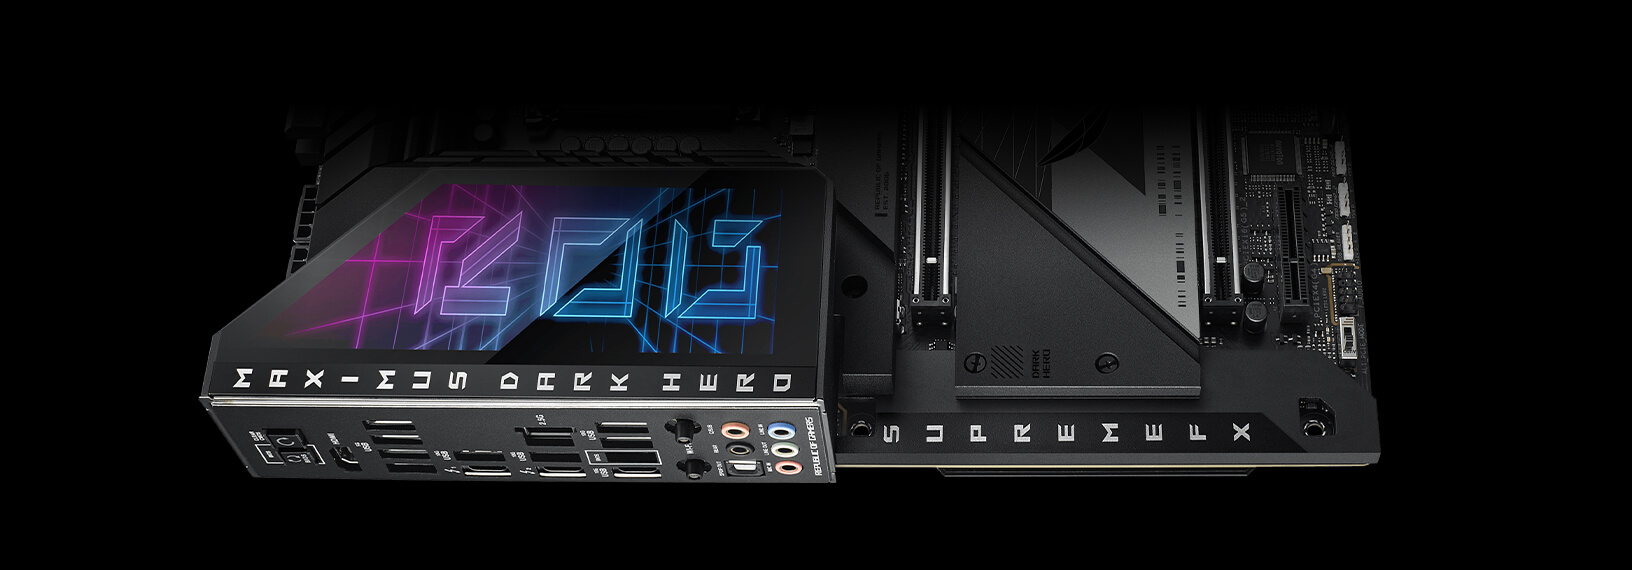 The ROG Maximus Z790 Dark Hero motherboard features SupremeFX audio.